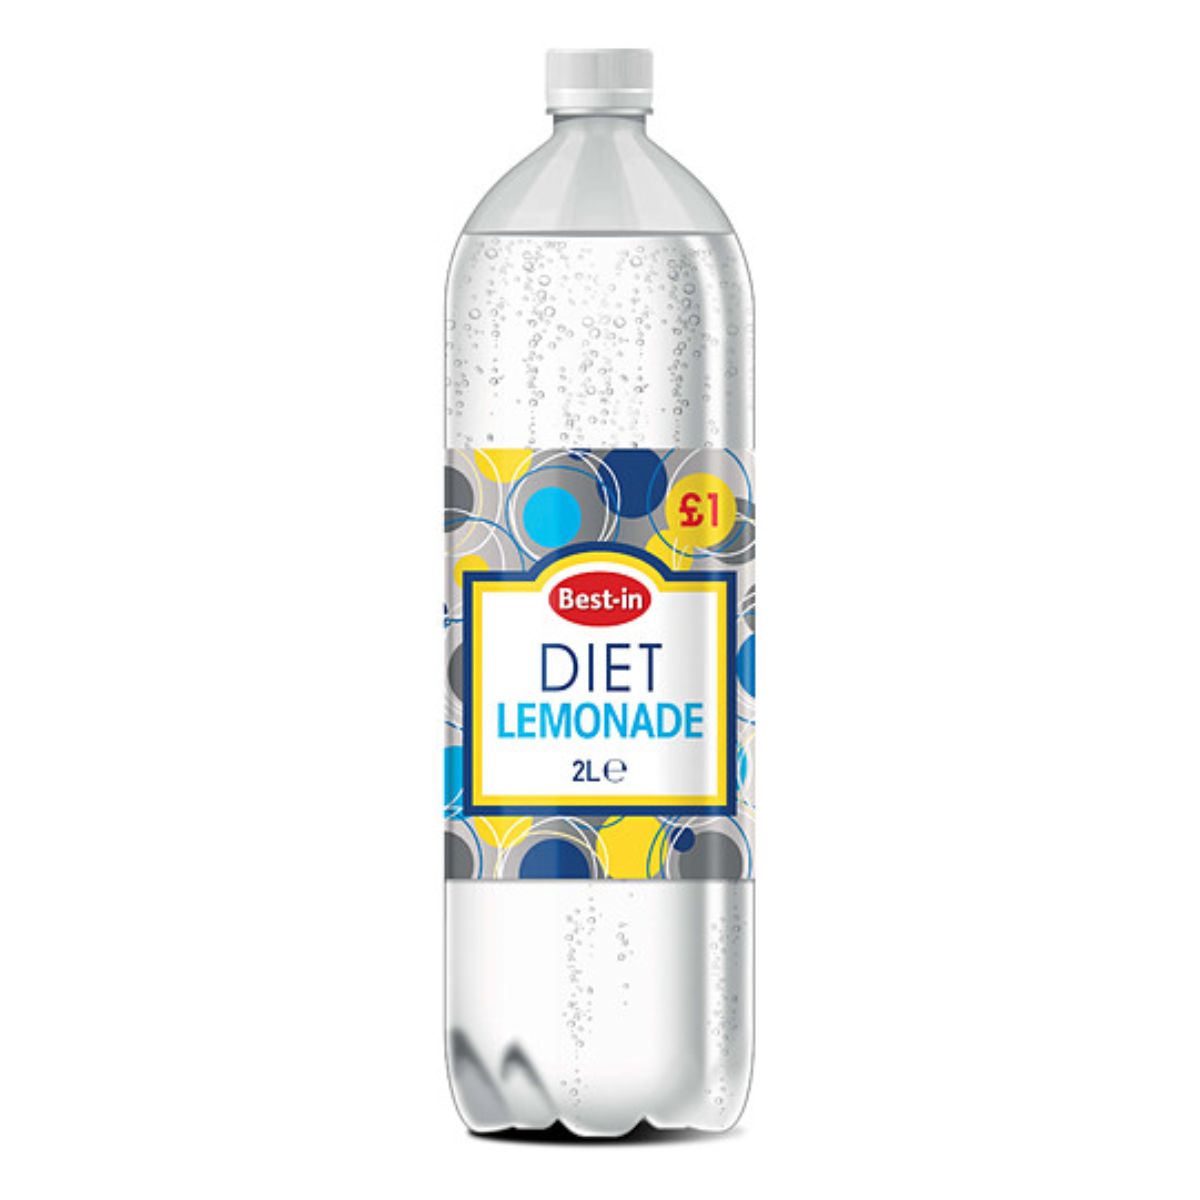 A bottle of Best In Diet Lemonade - 2L on a white background.